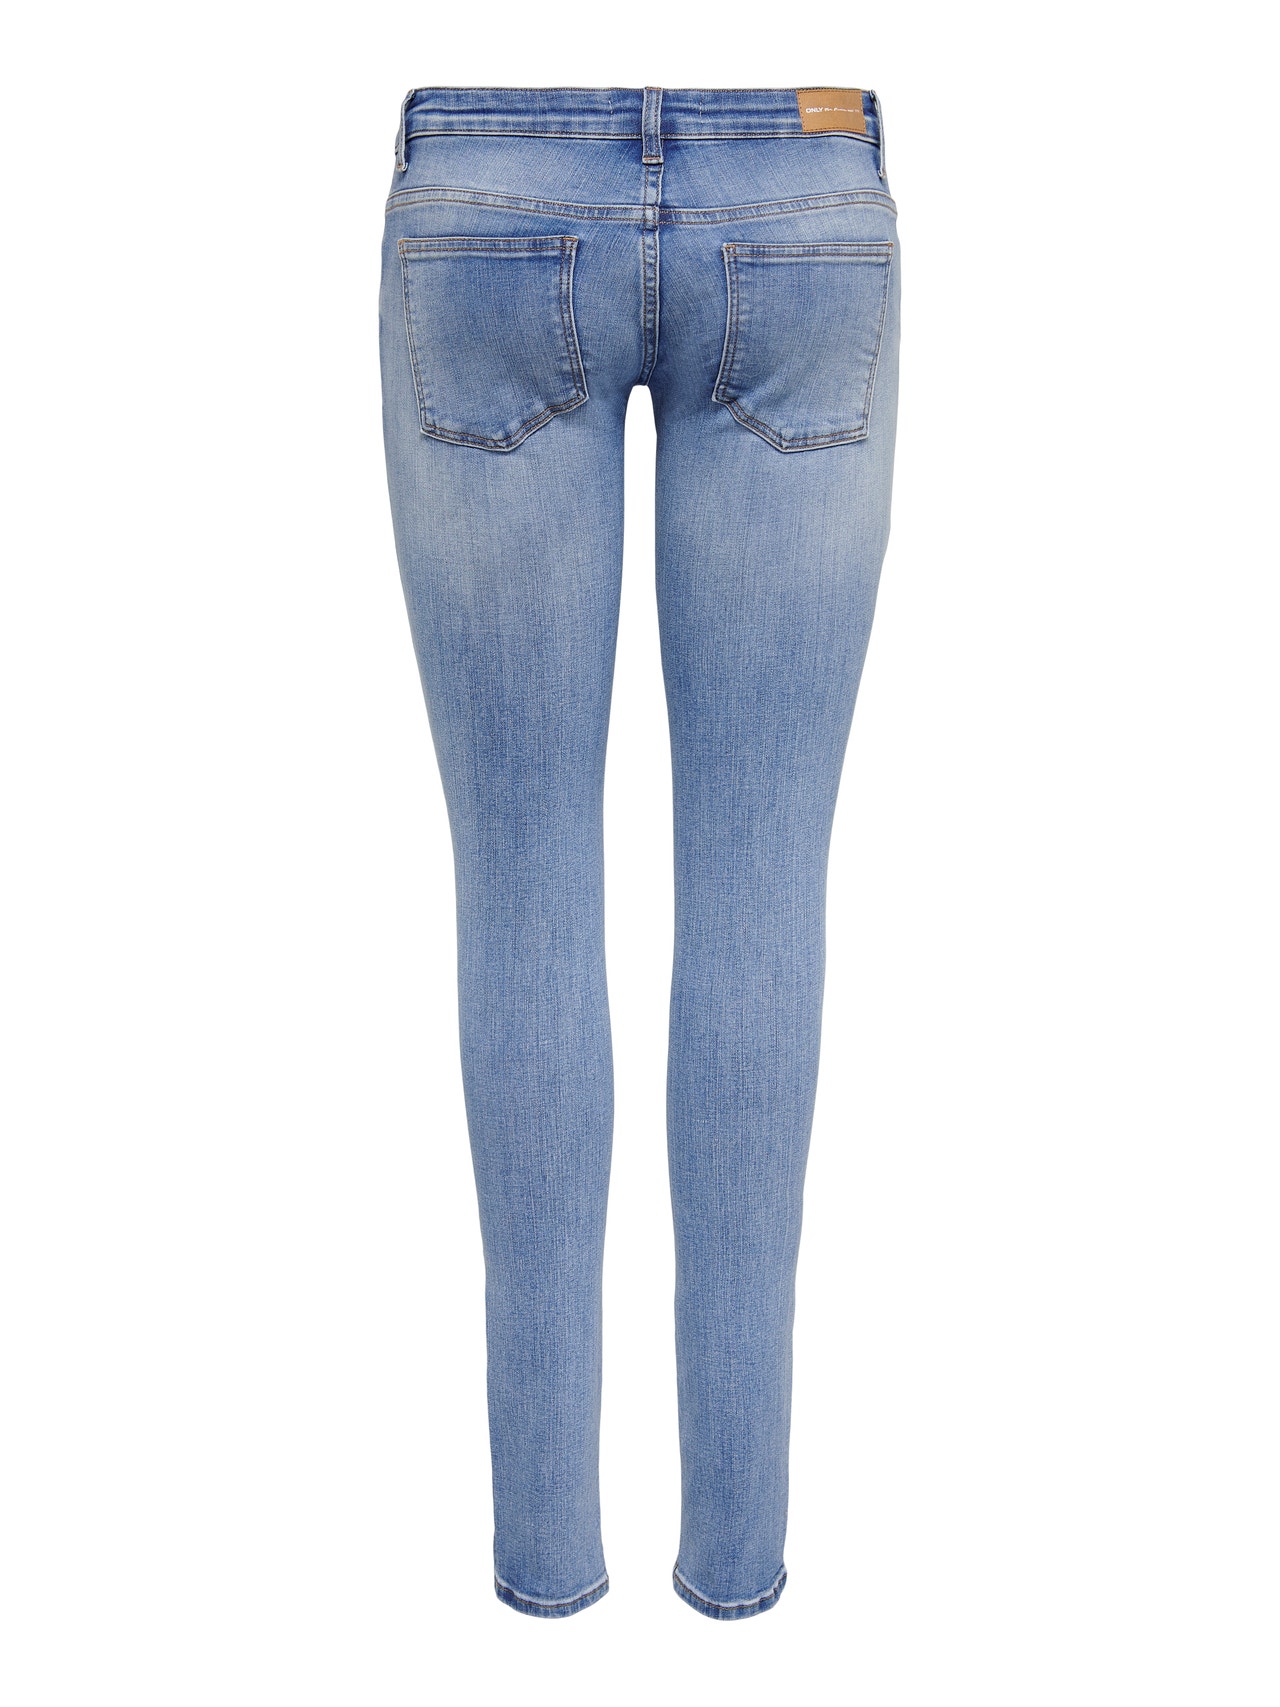 ONLY Skinny Fit Low waist Destroyed hems Jeans -Light Medium Blue Denim - 15282056